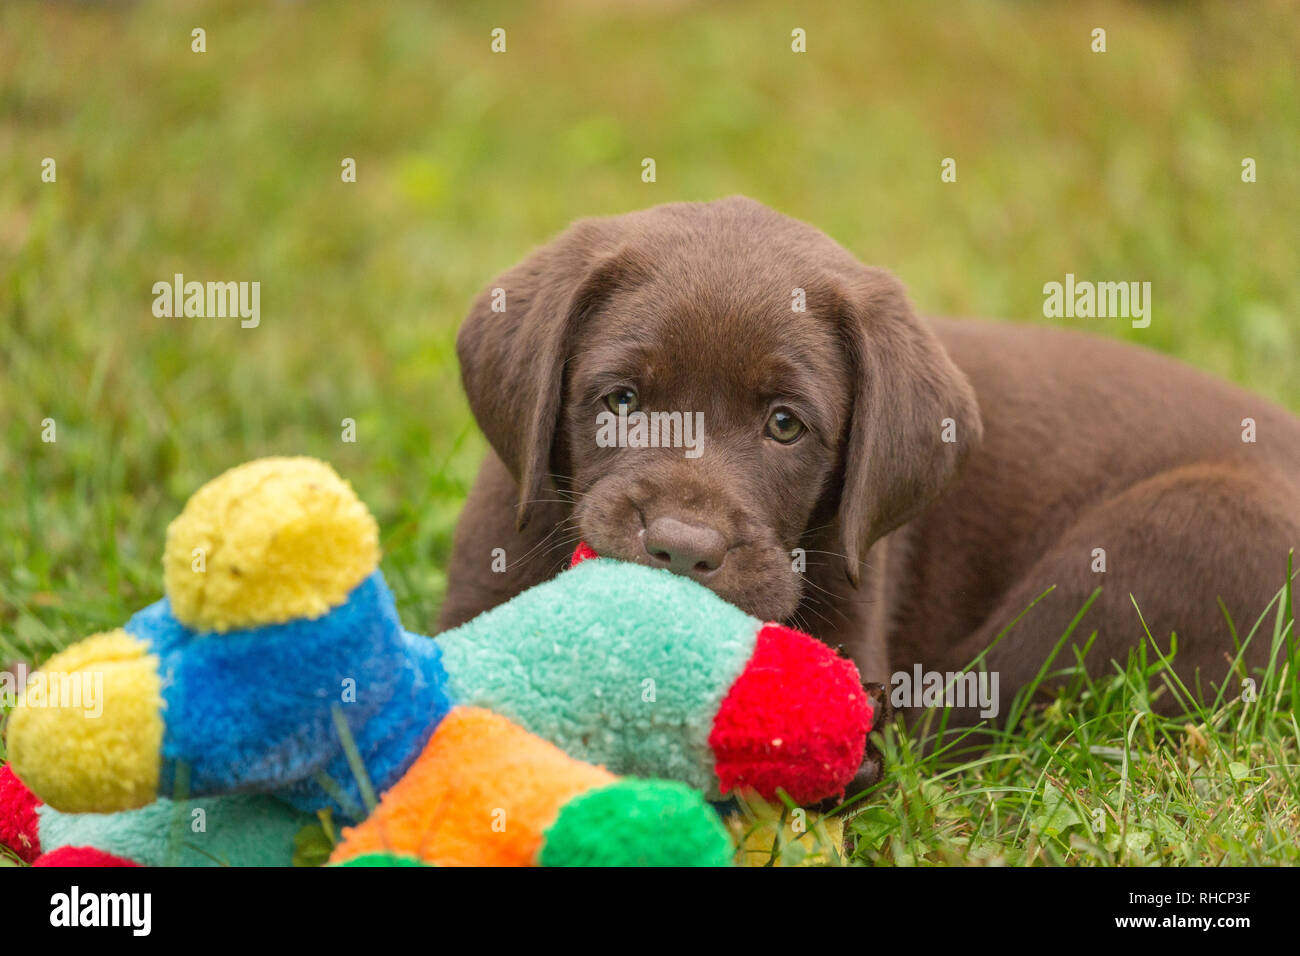 Chocolate Labrador Retriever Welpen Kauen auf ein buntes Spielzeug  Stockfotografie - Alamy